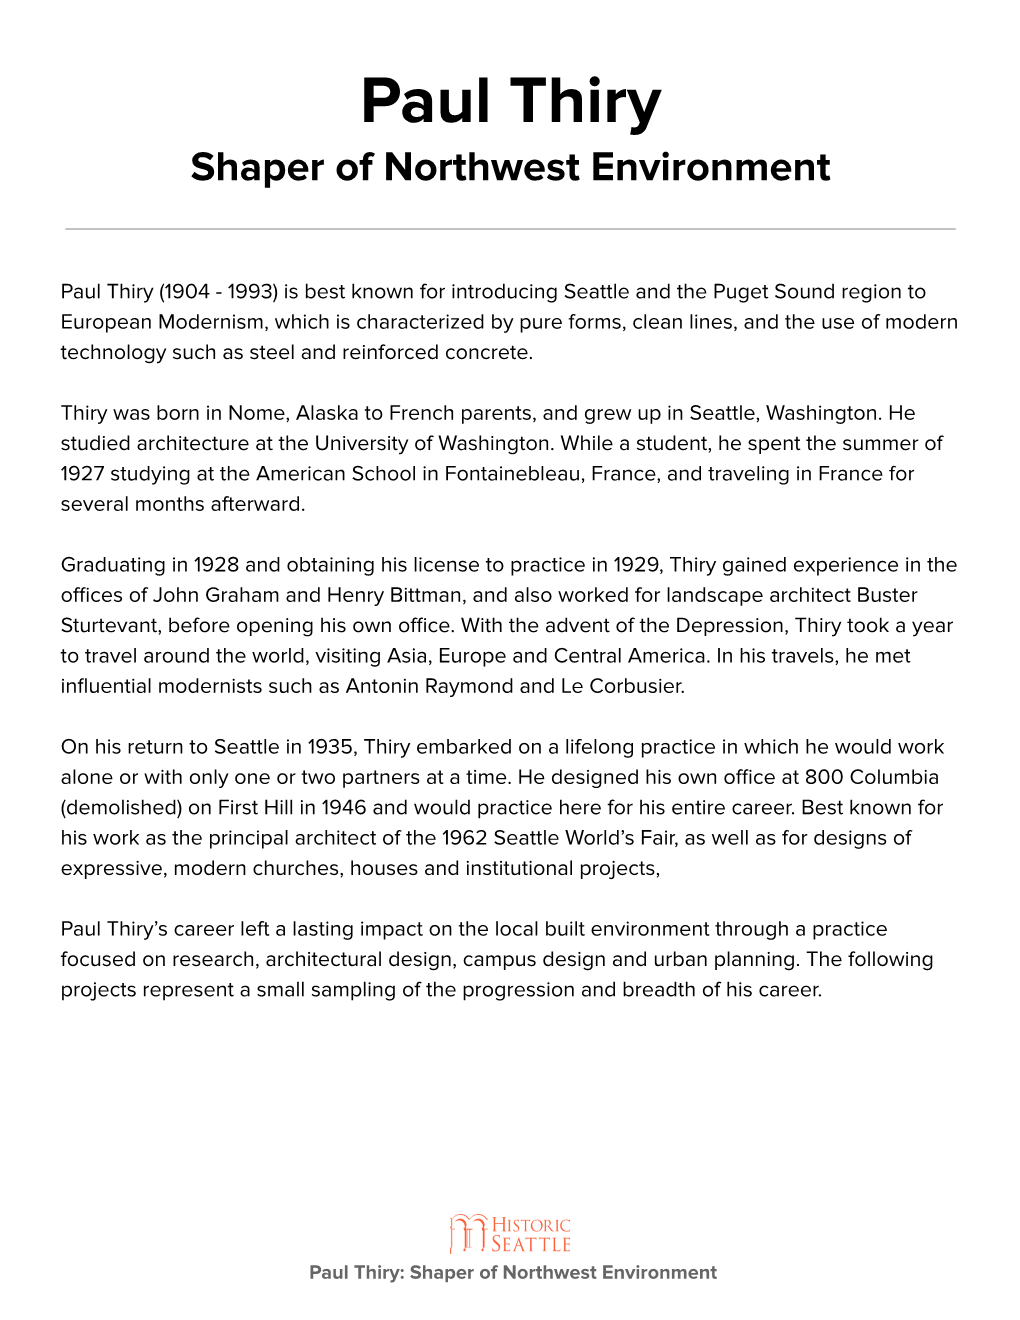 Paul Thiry Shaper of Northwest Environment